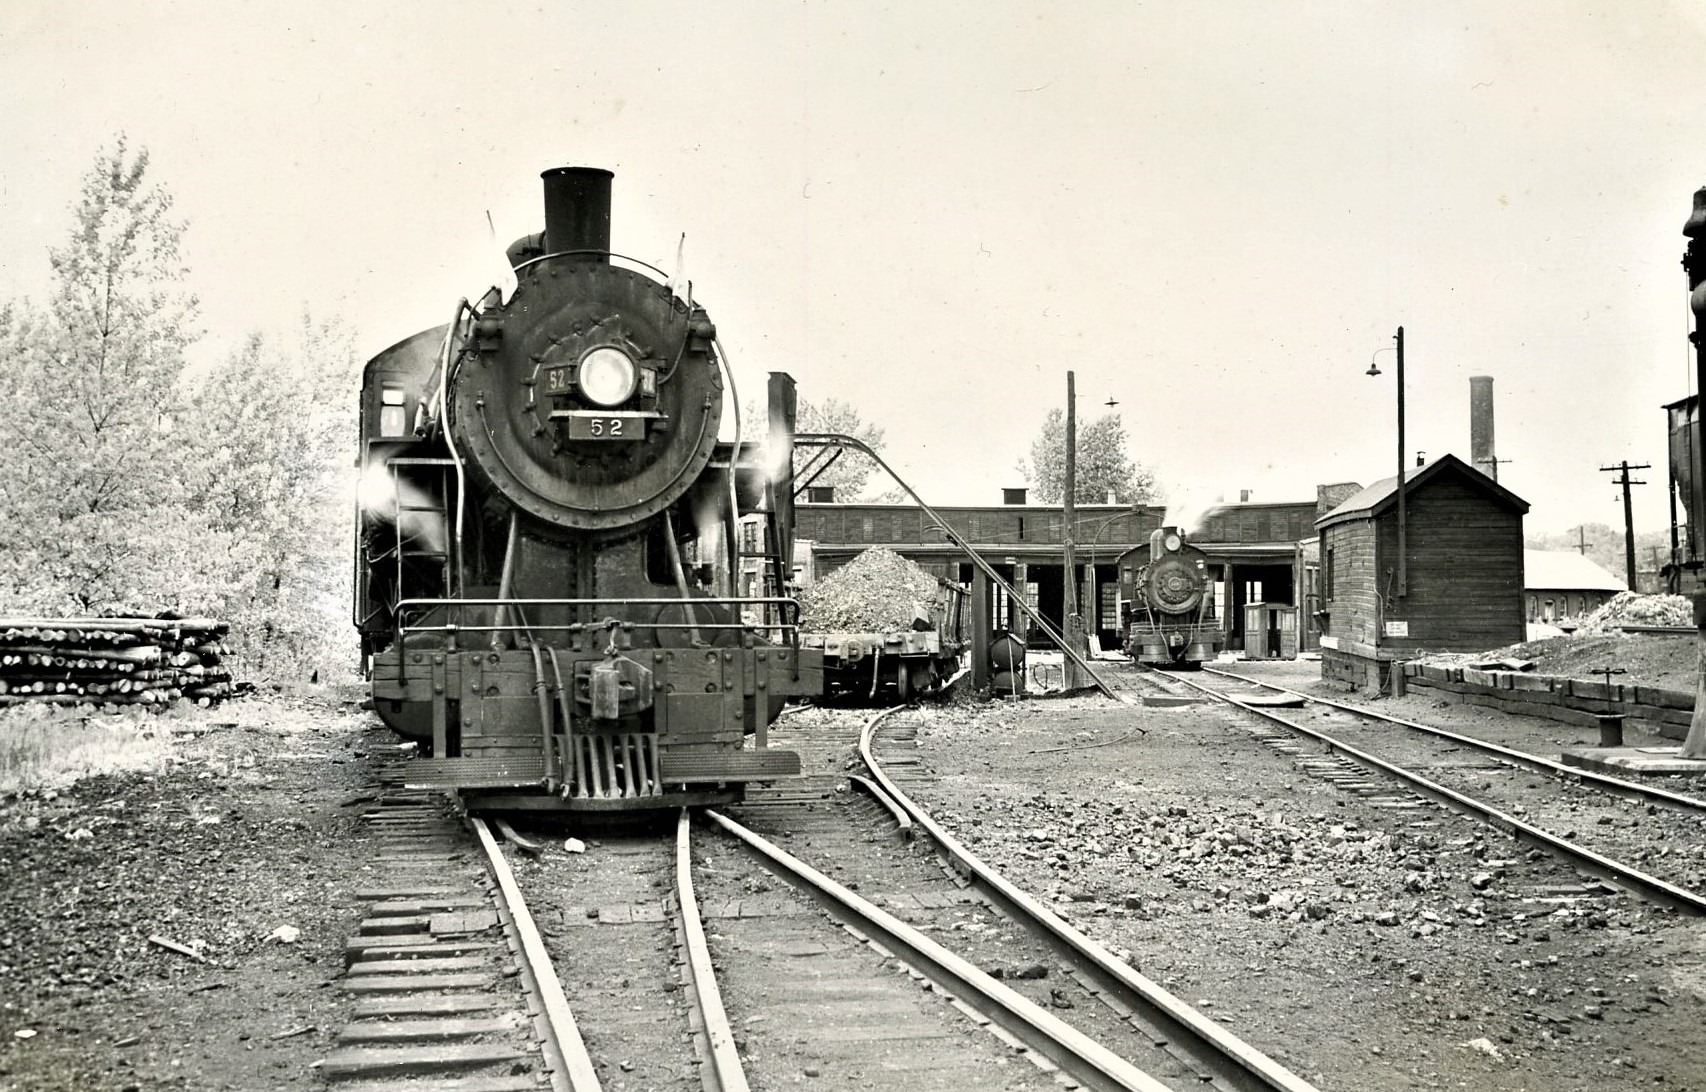 Rutland Railroad | Burlington, Vermont | Class F-11a 4-6-0 #52 and B-2a 0-6-0 steam locomotives | 1949 | Dr. Philip Hastings photograph